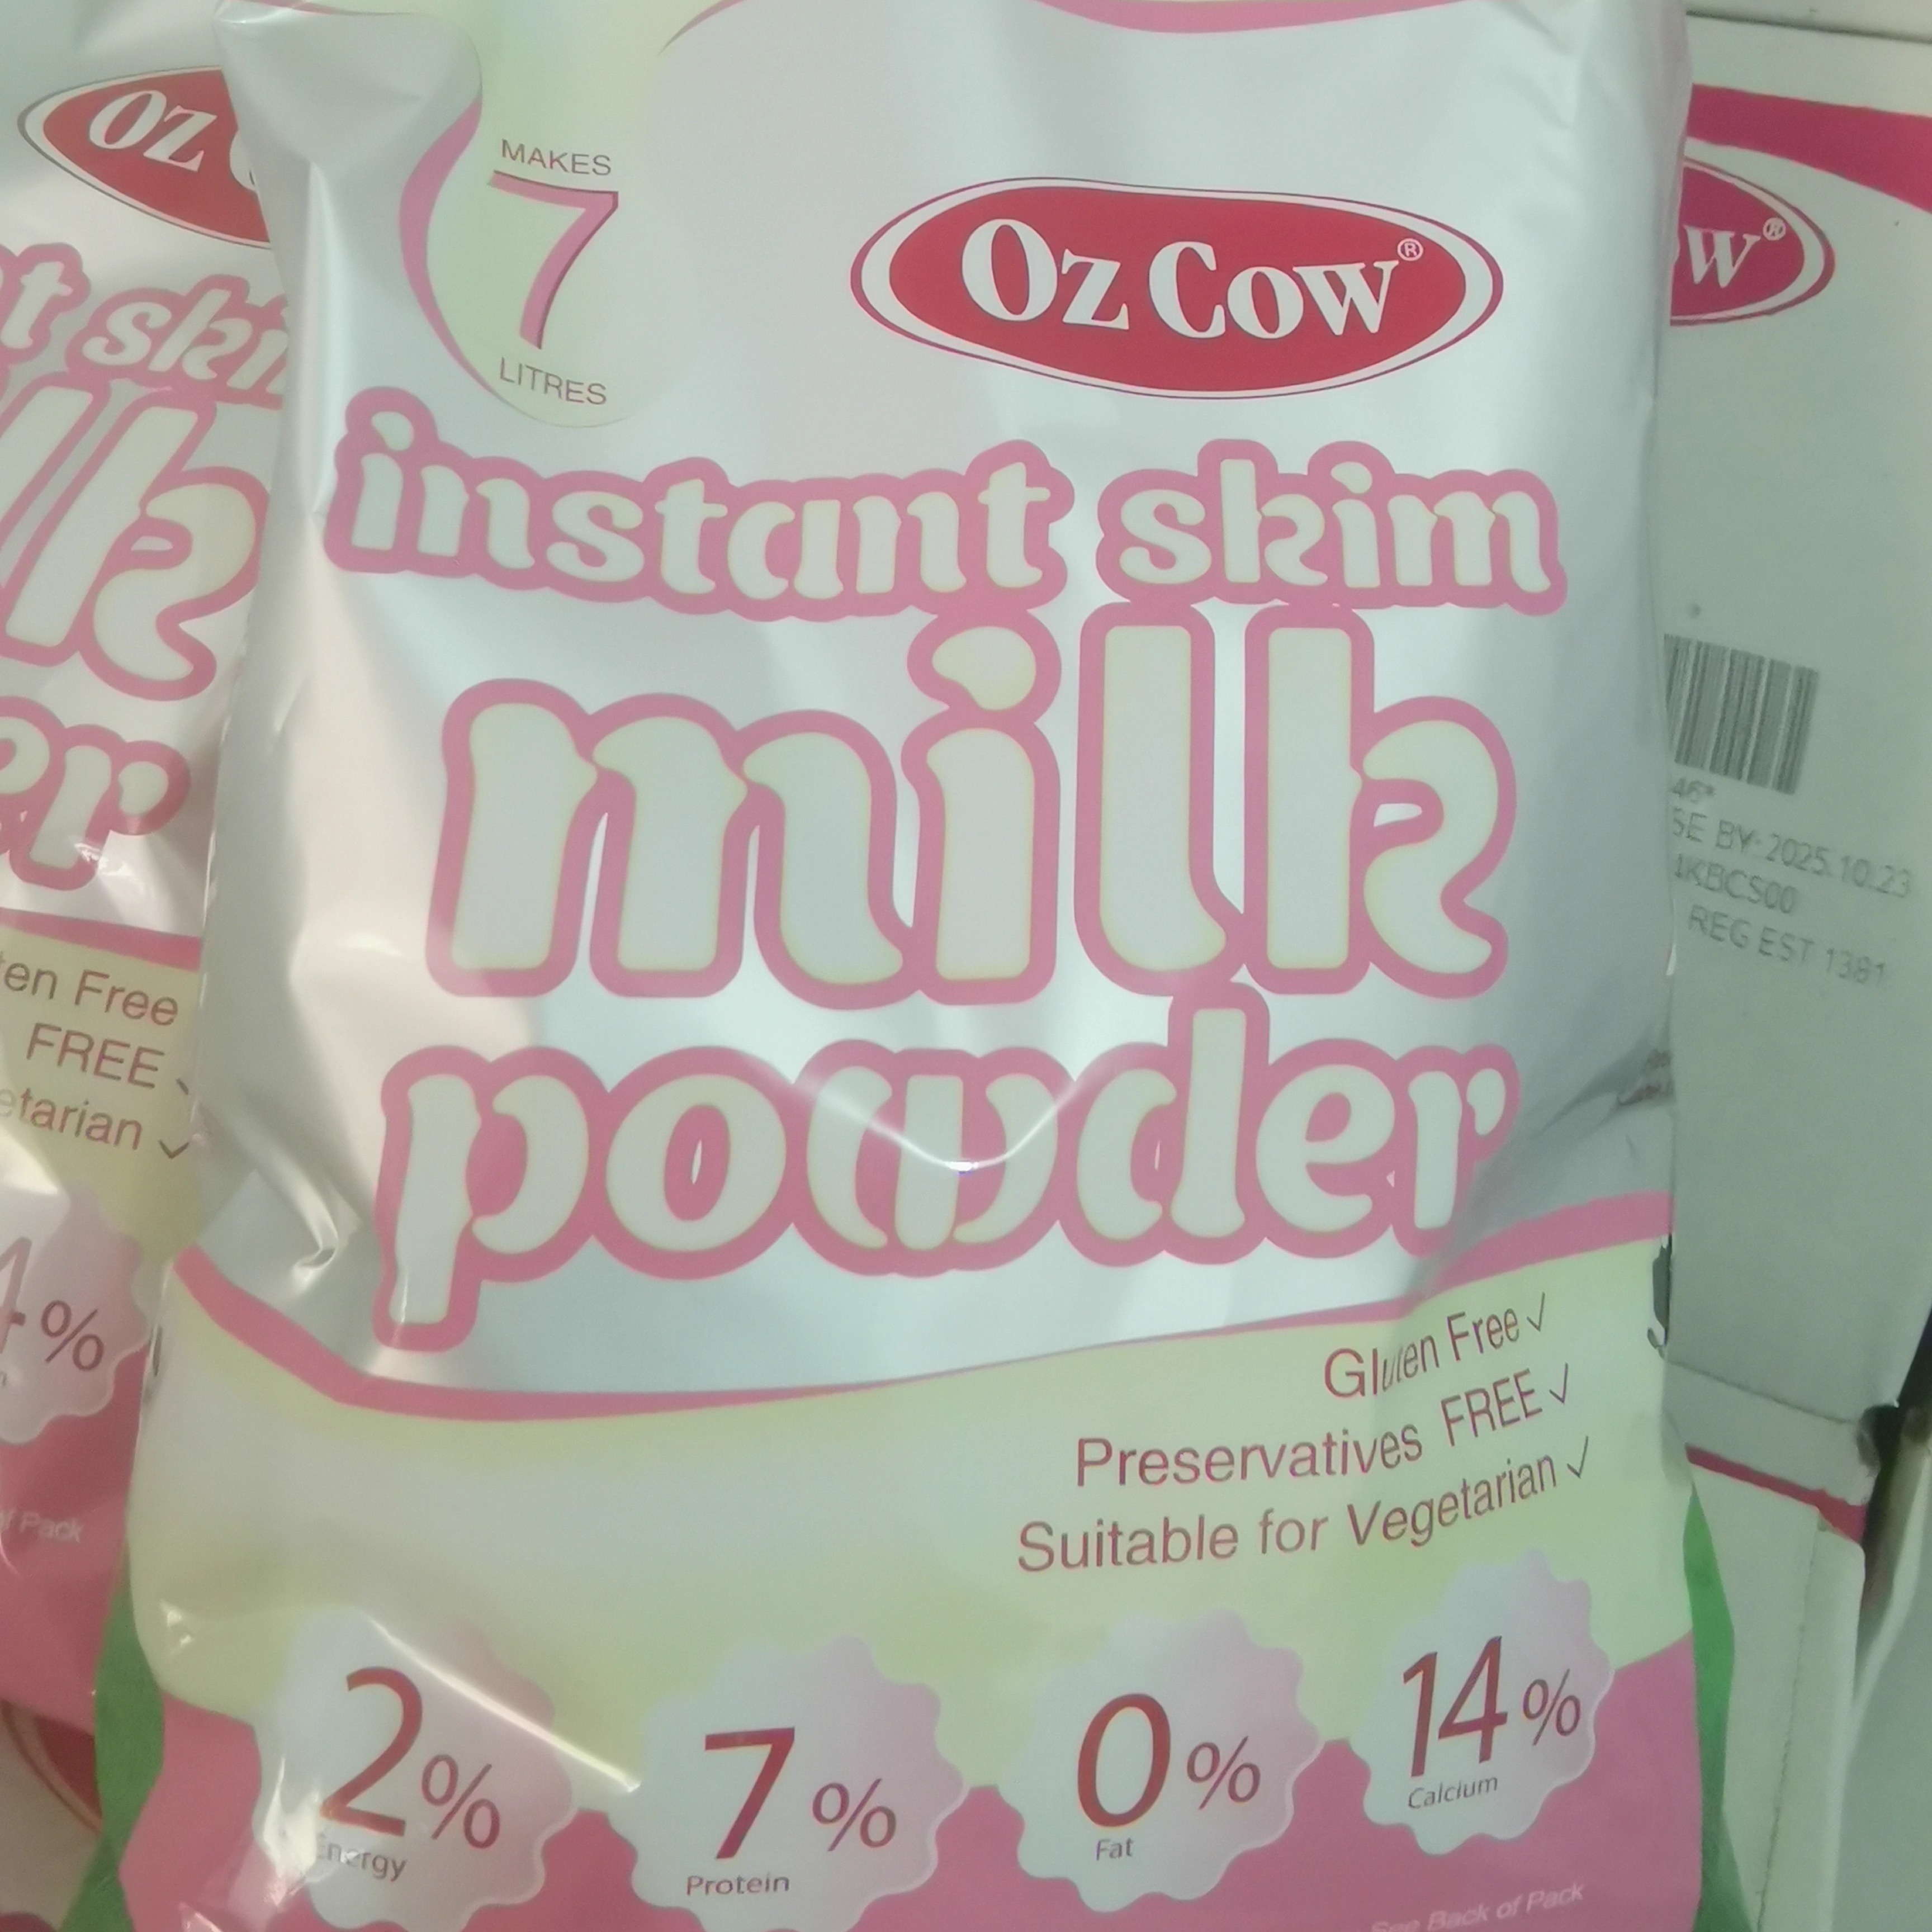 OZCOW脱脂奶粉 澳大利亚金可澳原装进口成人速溶无脂牛奶两袋包邮 咖啡/麦片/冲饮 全家营养奶粉 原图主图